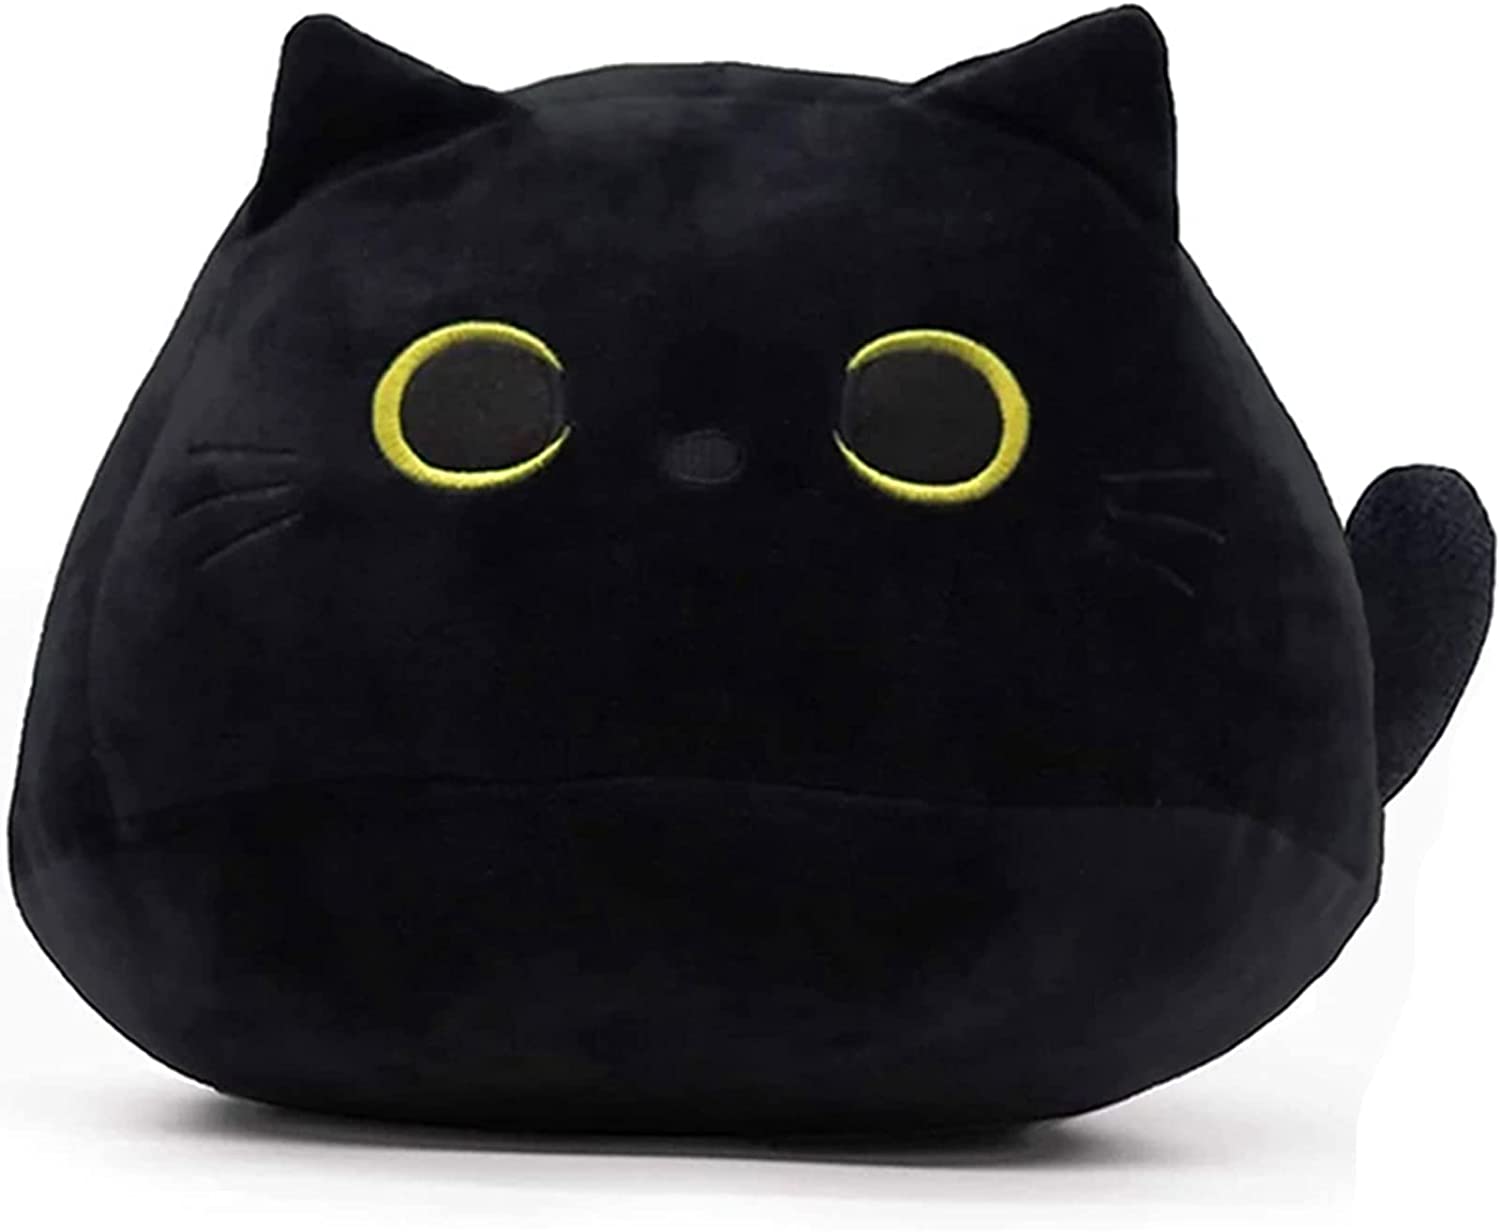 Yoruii Plush Toy Black Cat, Creative Cat Shape Pillow, Cute Cat Plush ...